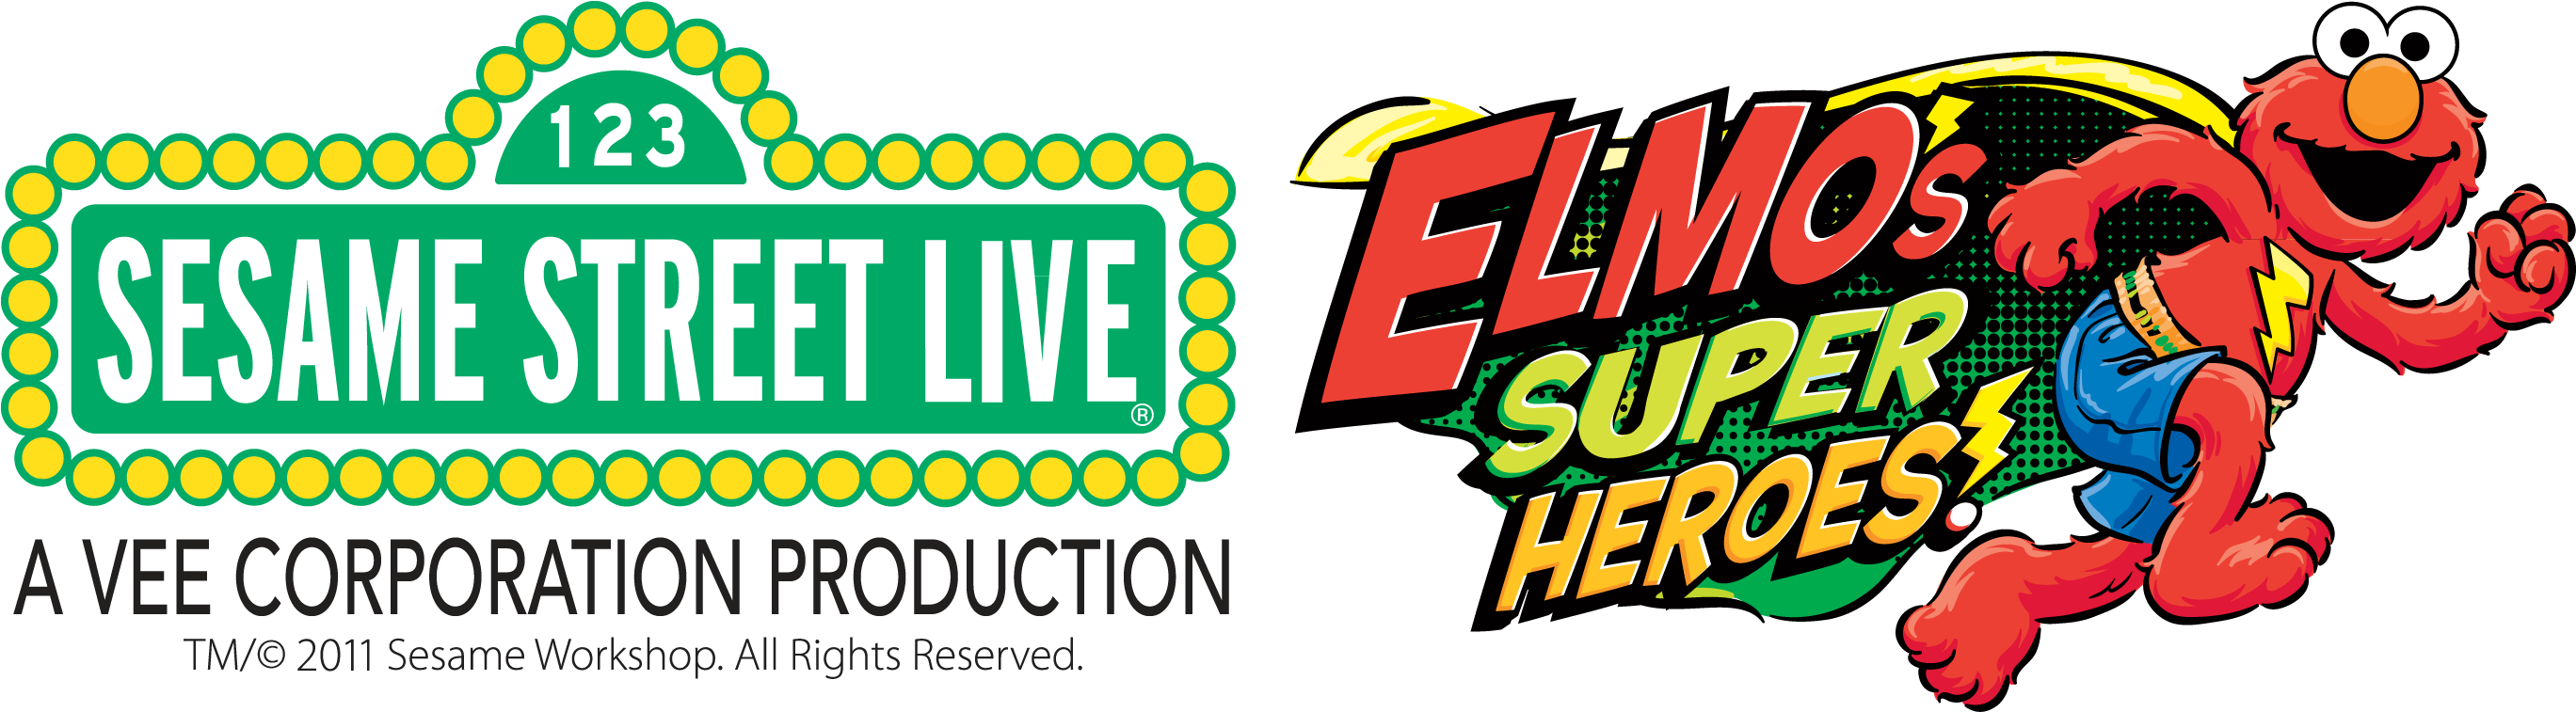 Sesame Street Live Logo.